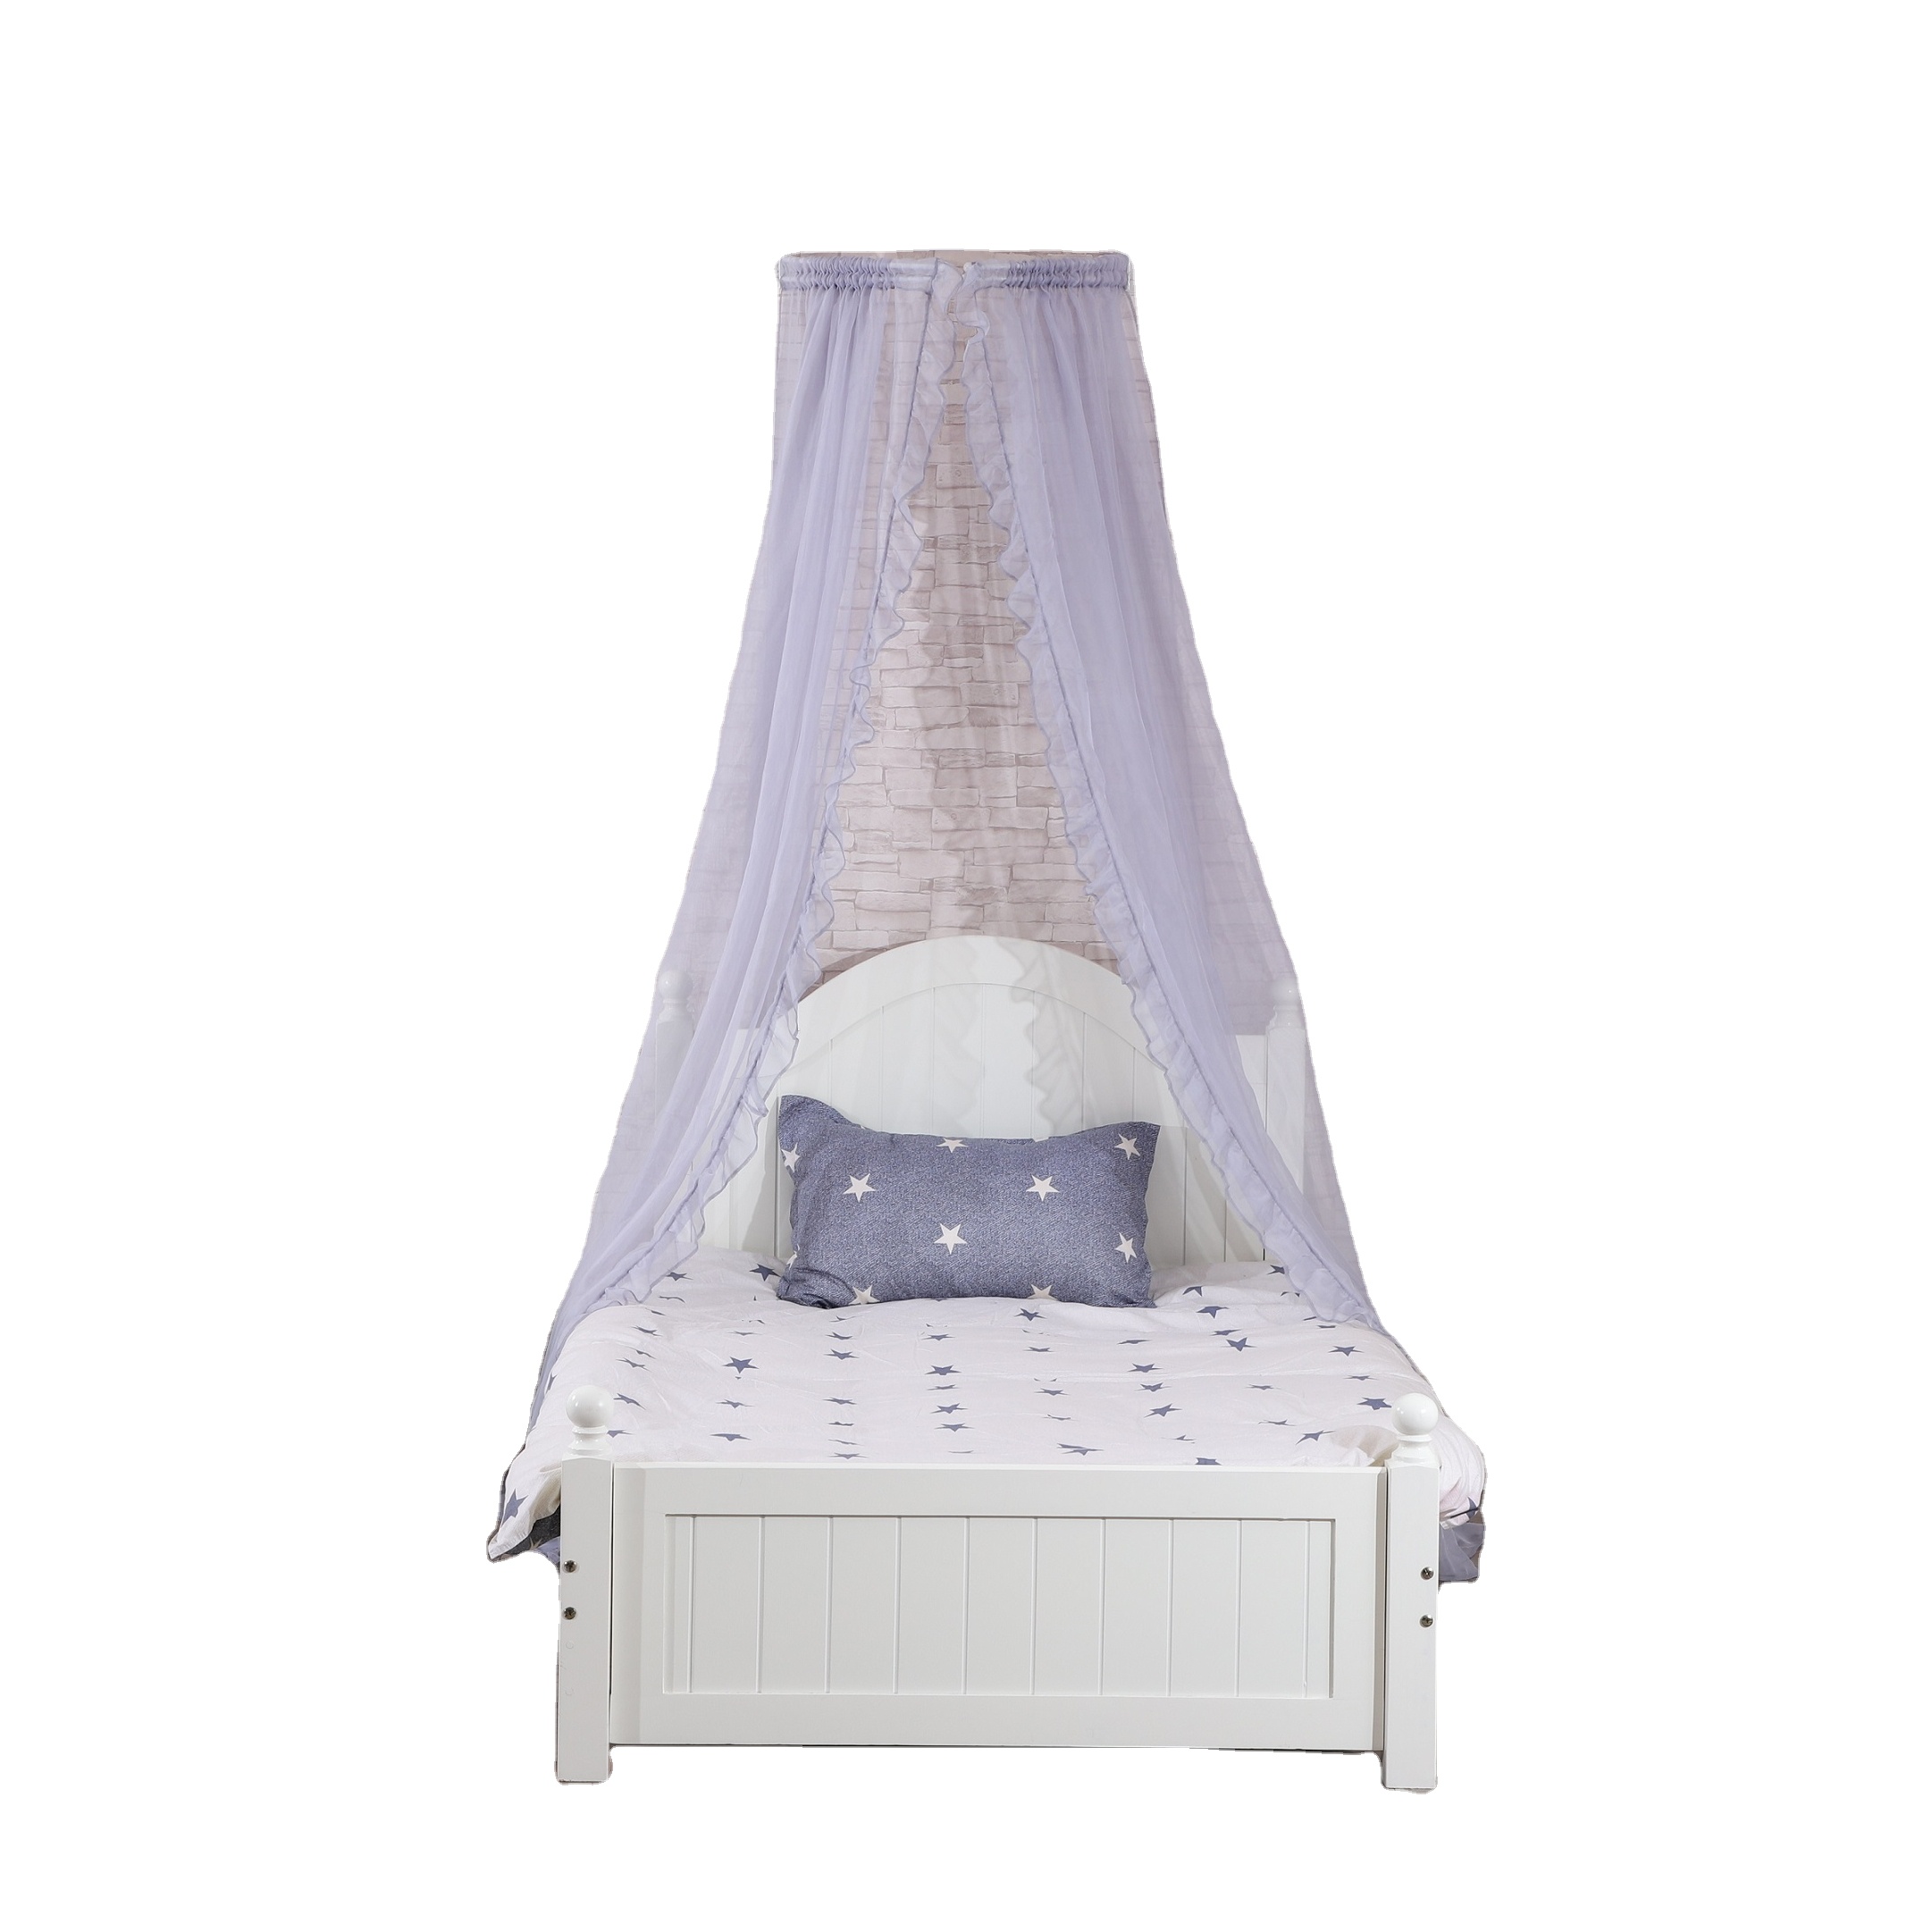 Moda de buena calidad princesa real gris corona cama manto dosel niñas encaje decorativo mosquitera